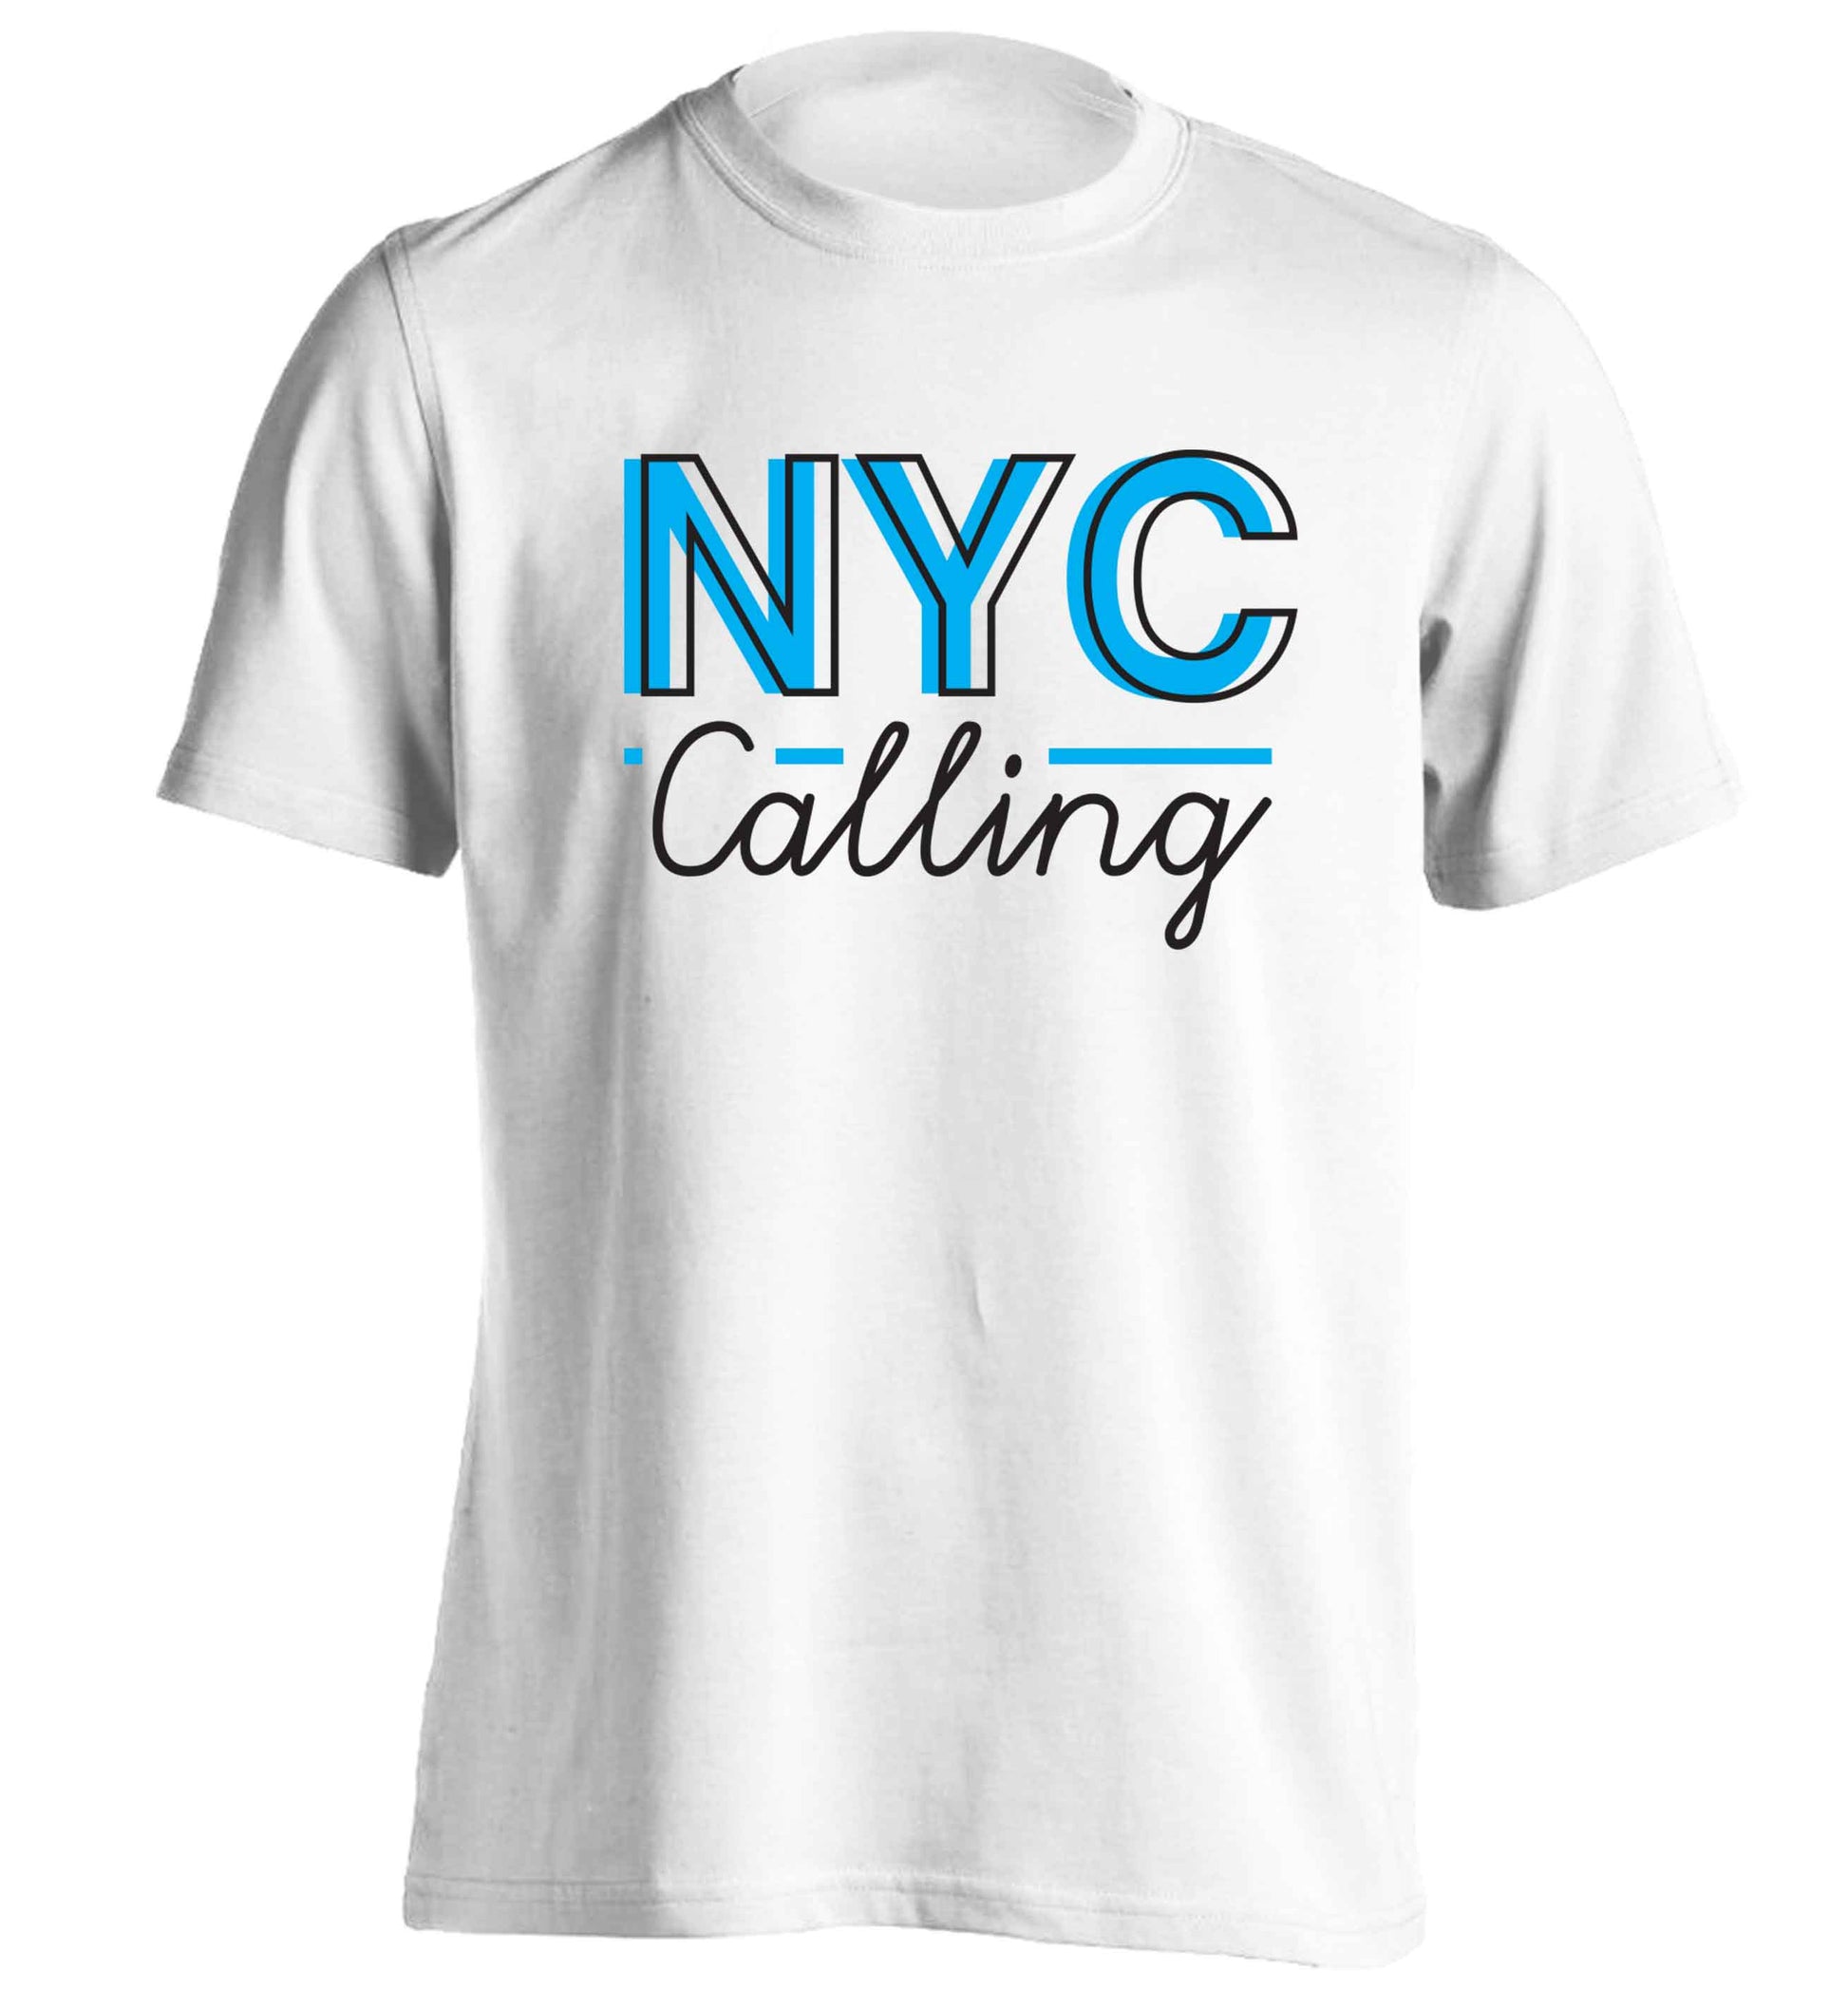 NYC calling adults unisex white Tshirt 2XL